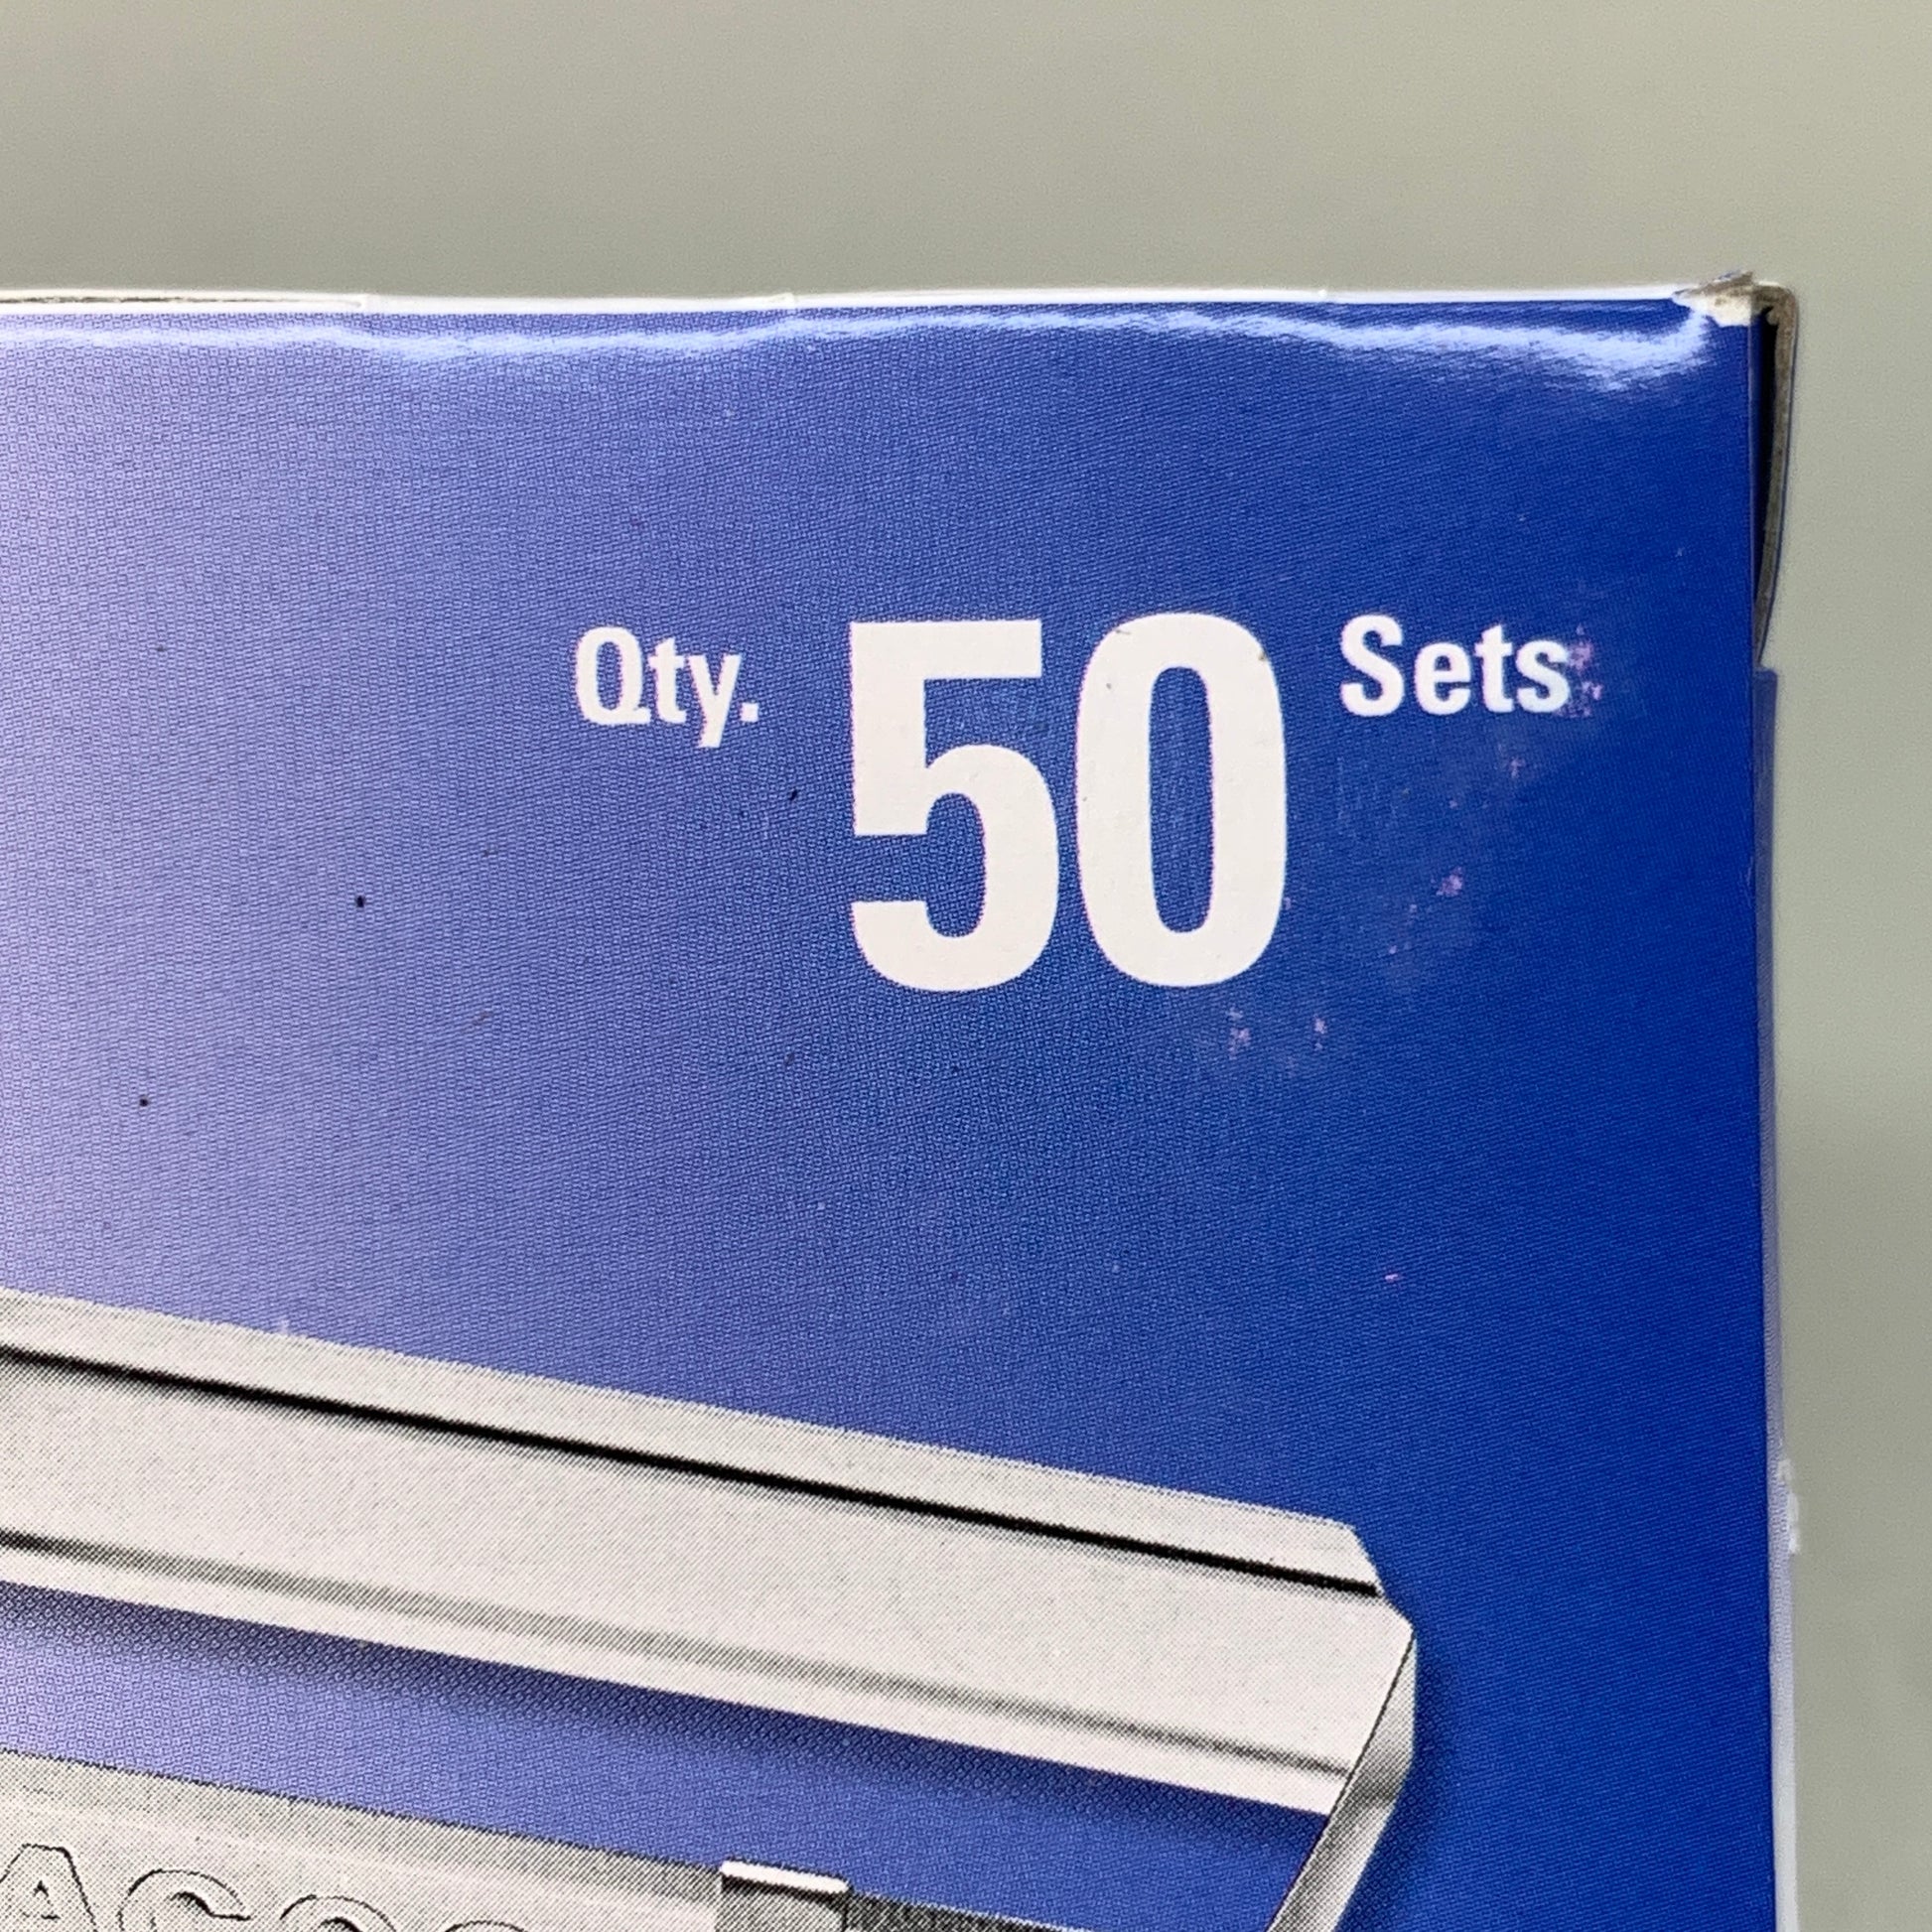 Acco Premium 2 Piece Paper File Fasteners- 1 Capacity- 50/Box